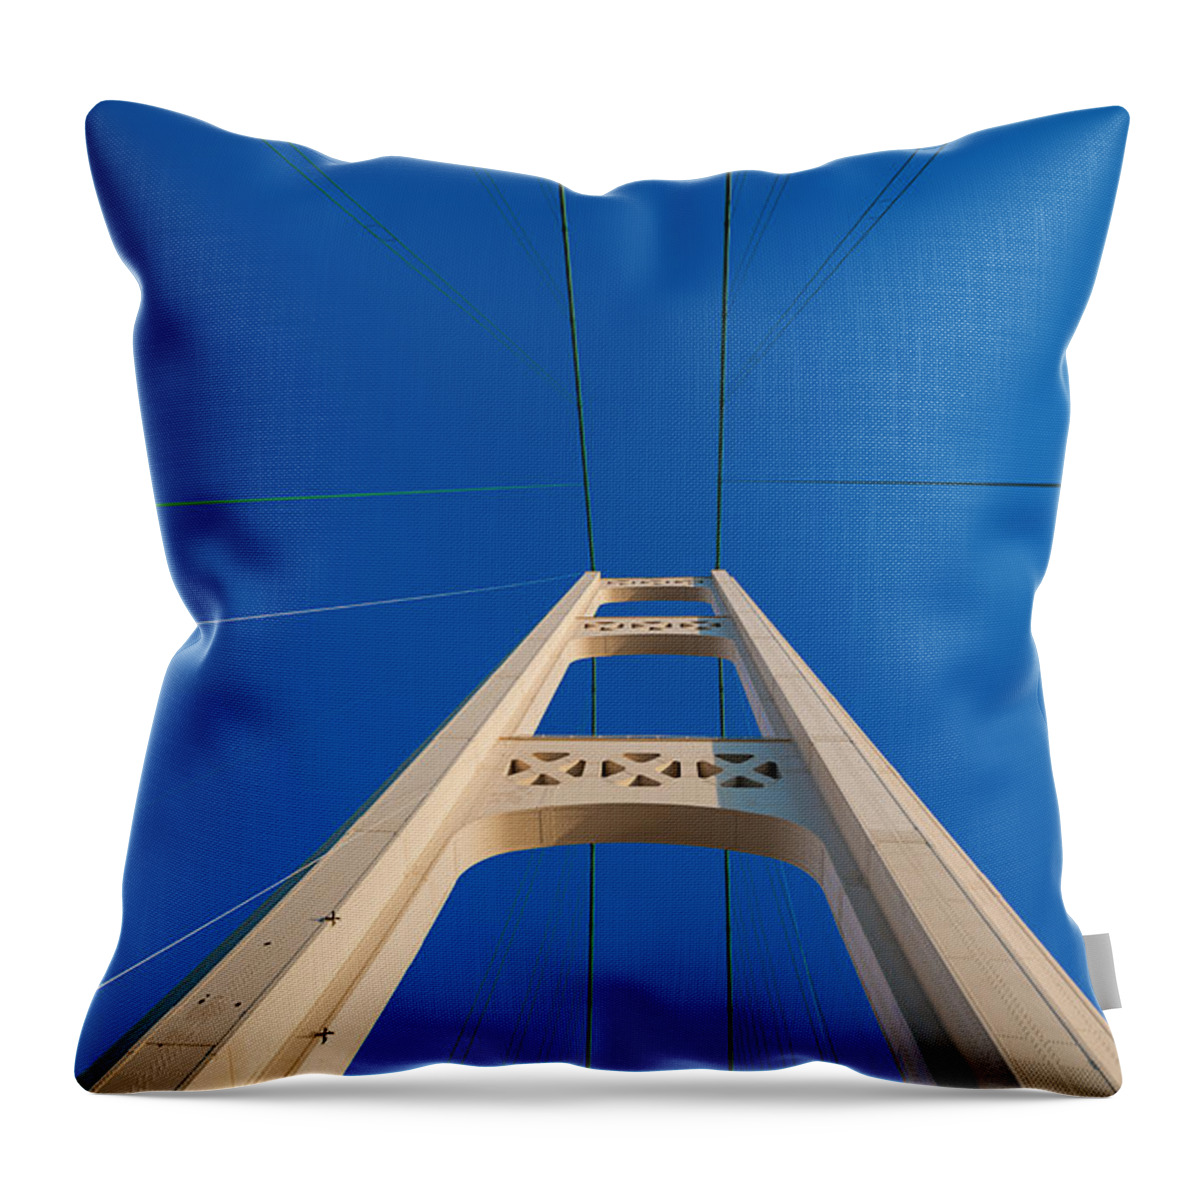 Michigan Throw Pillow featuring the photograph Mackinac Bridge South Tower by Steve Gadomski